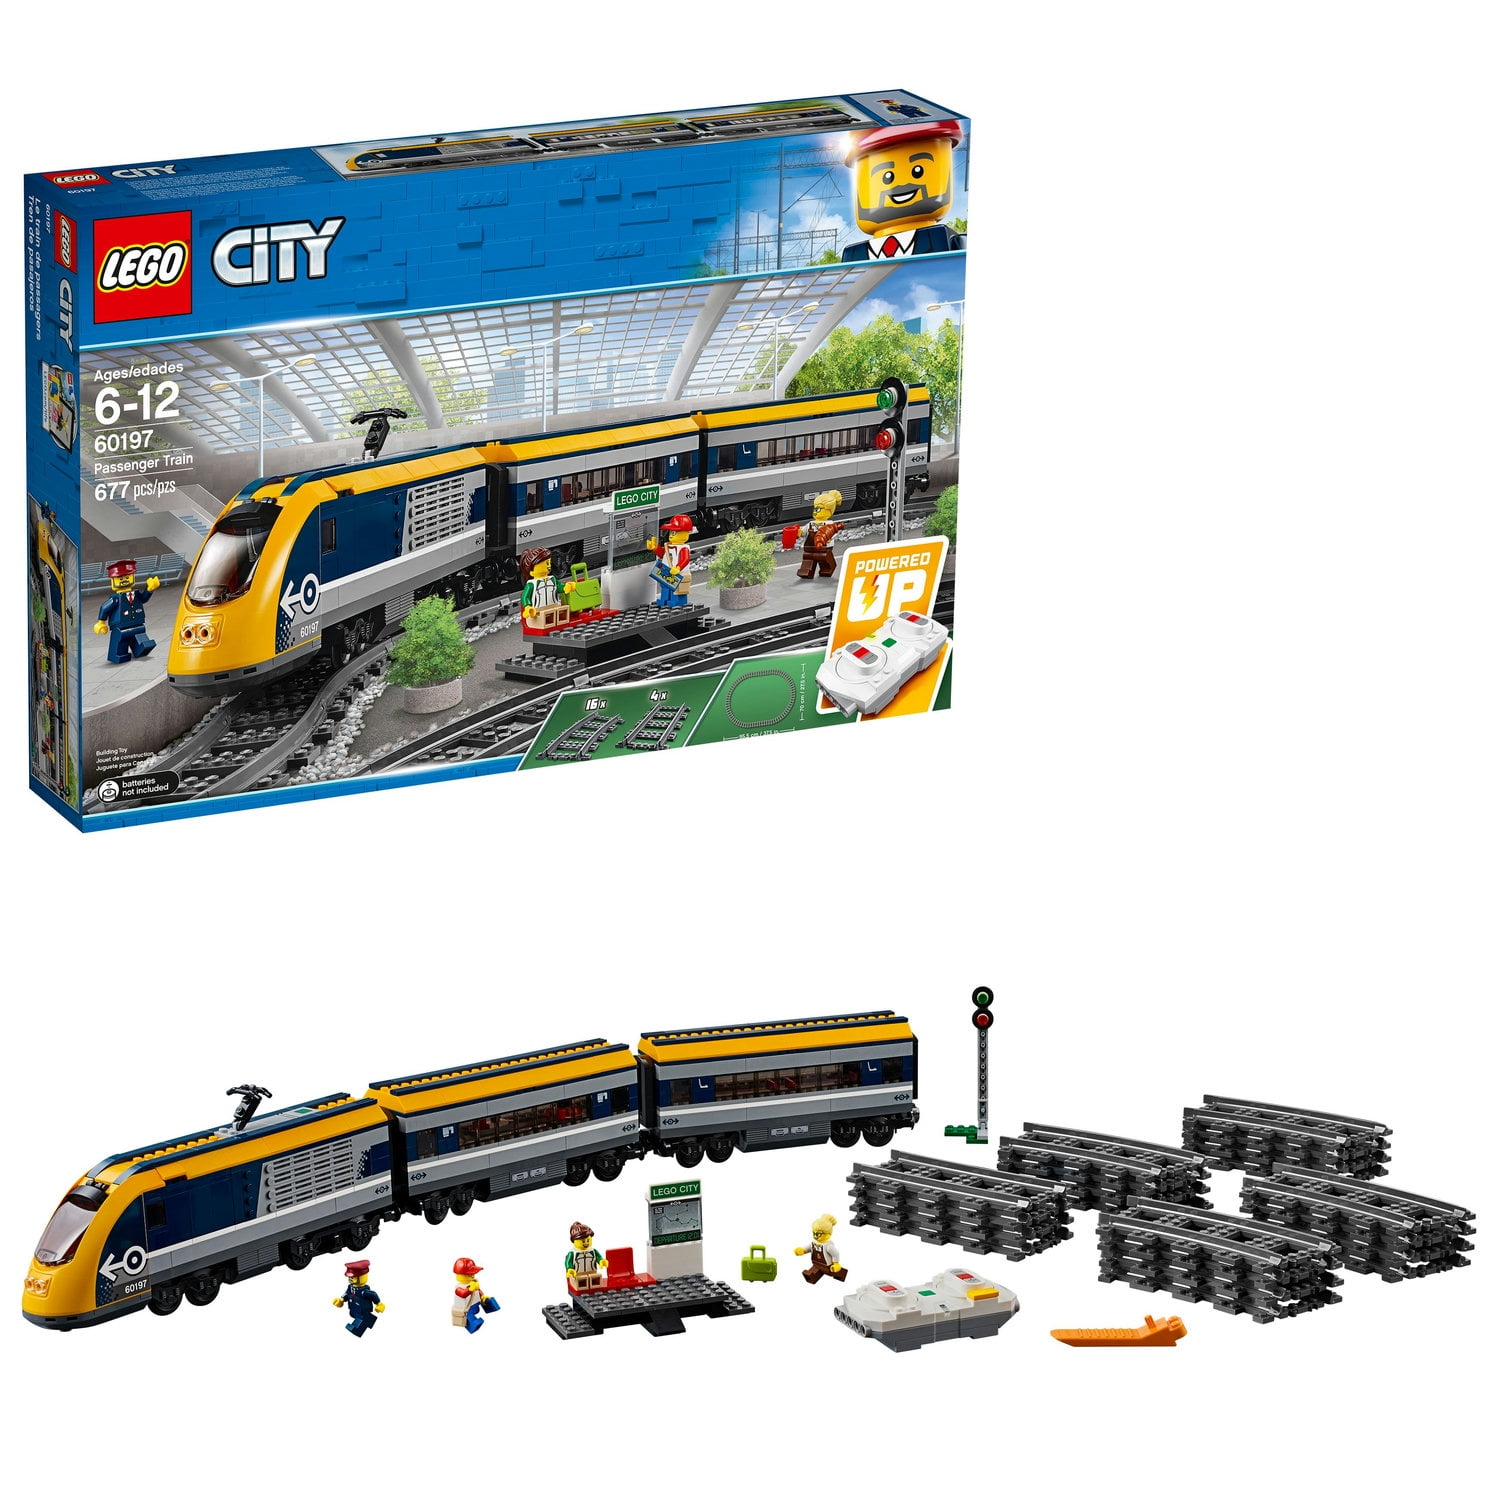 City Passenger Train 60197 -